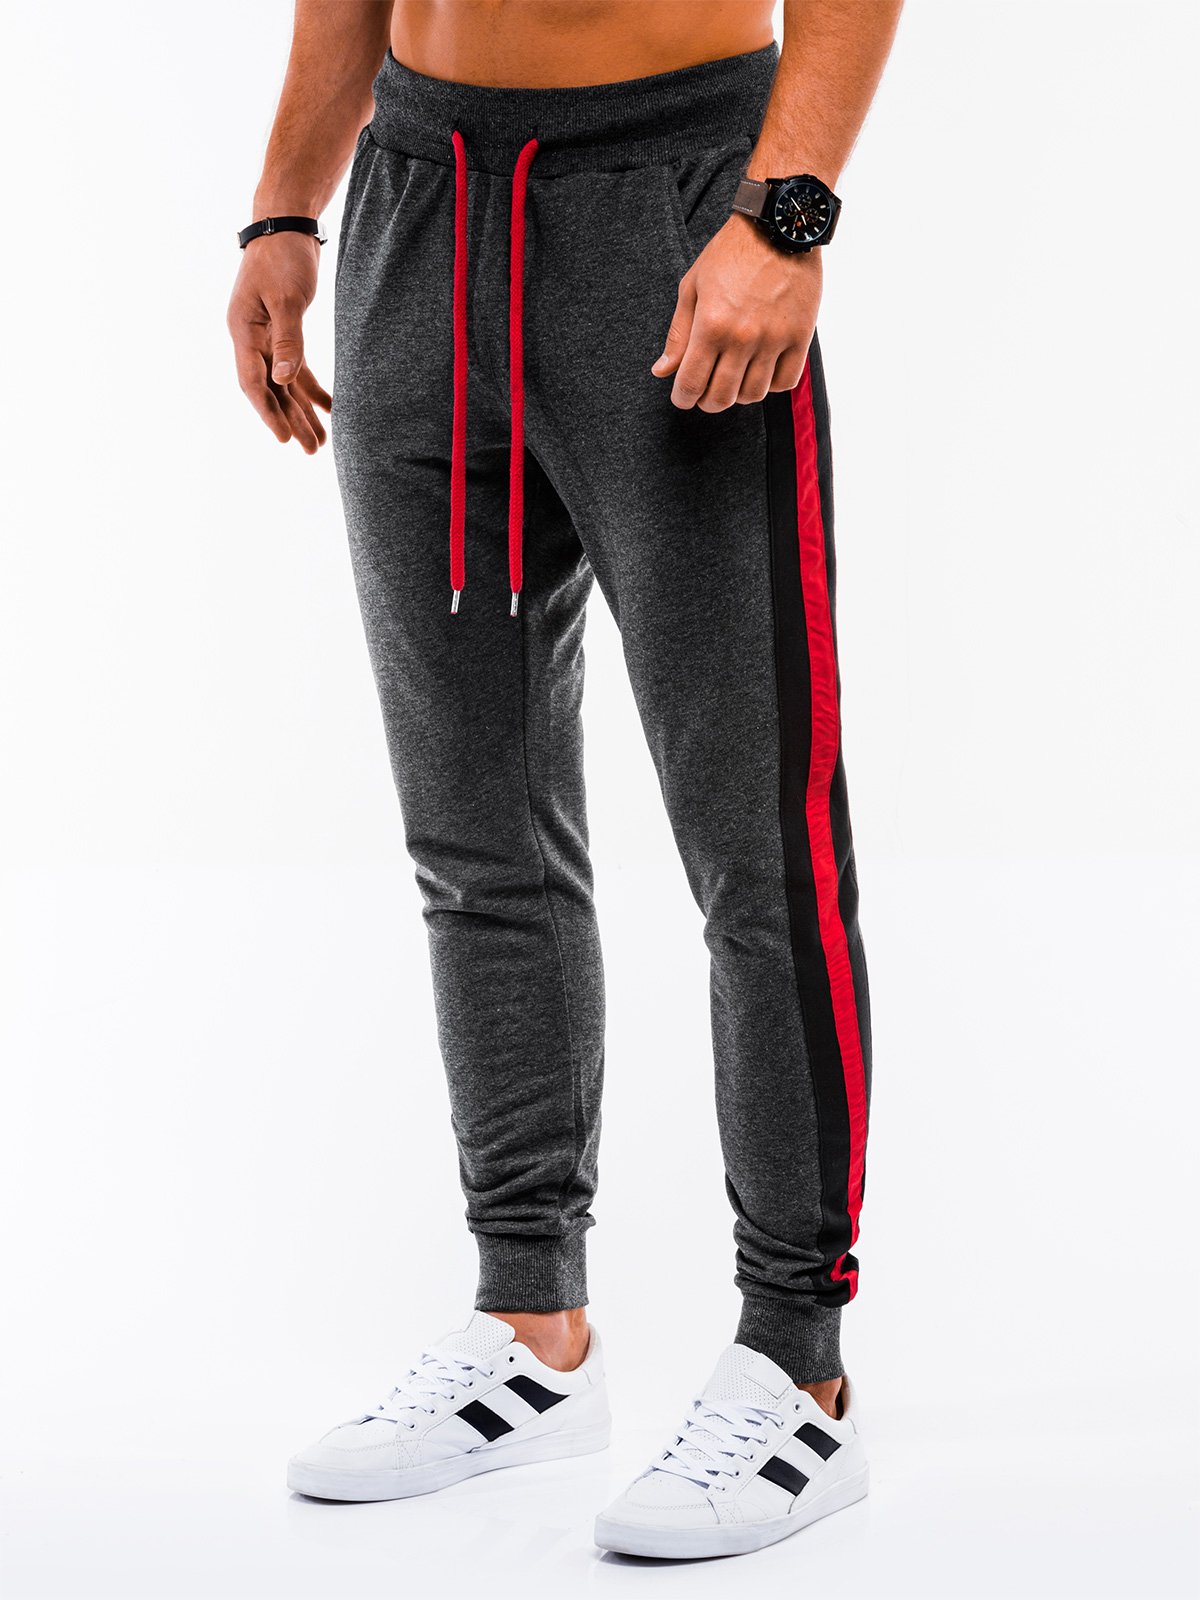 Men's sweatpants P715 - dark grey | MODONE wholesale - Clothing For Men